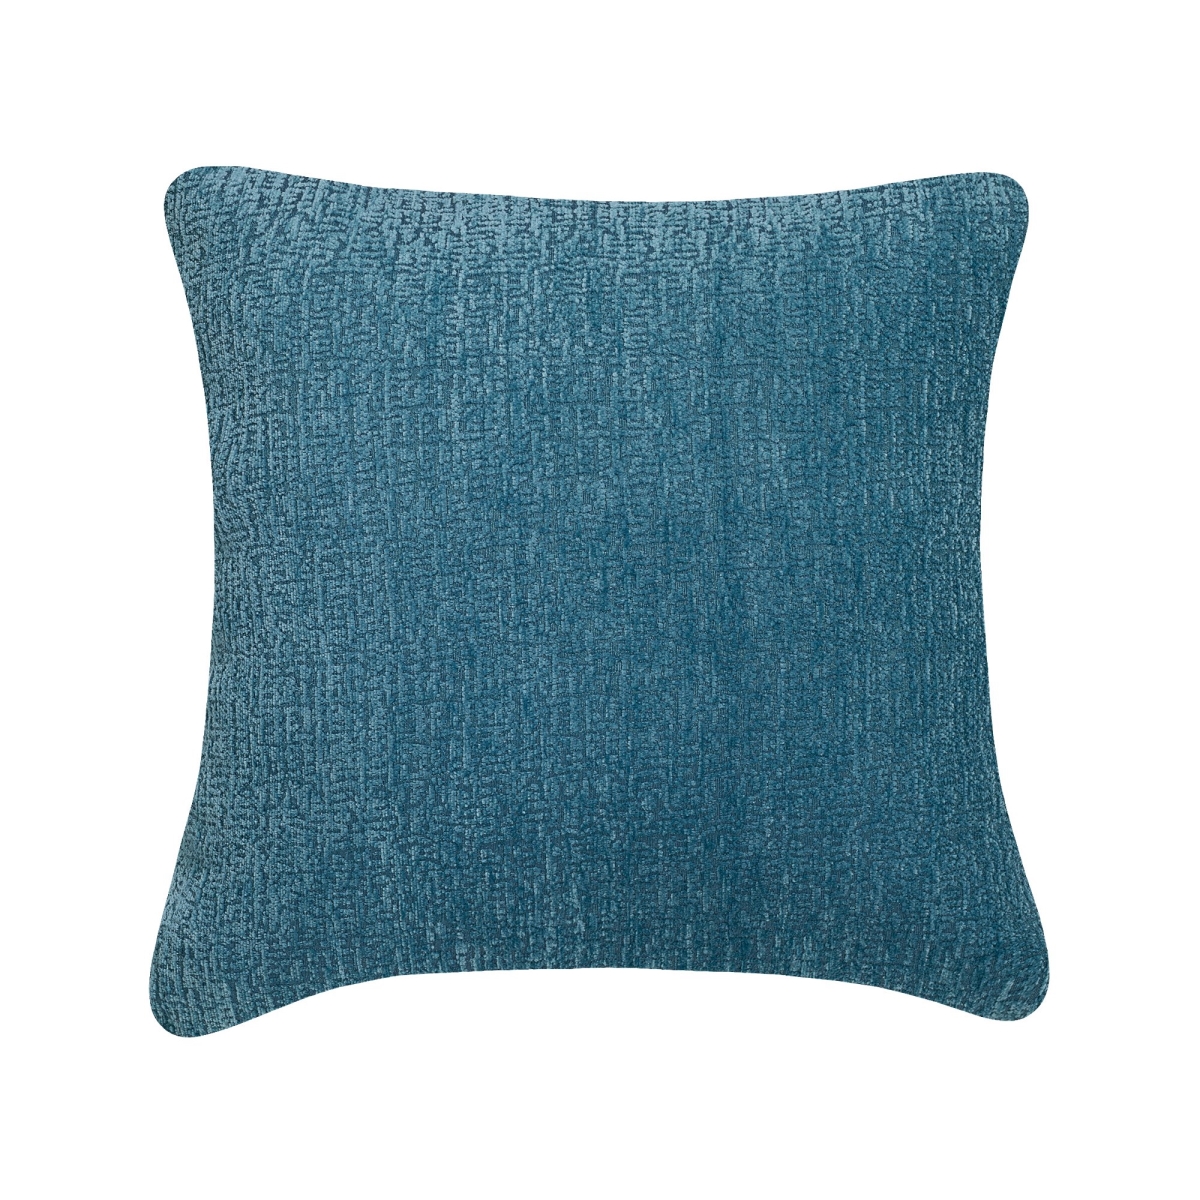 Sq-cs-wmvece-tuise-1818 18 X 18 In. Venice Decorative Cushion - Turquoise